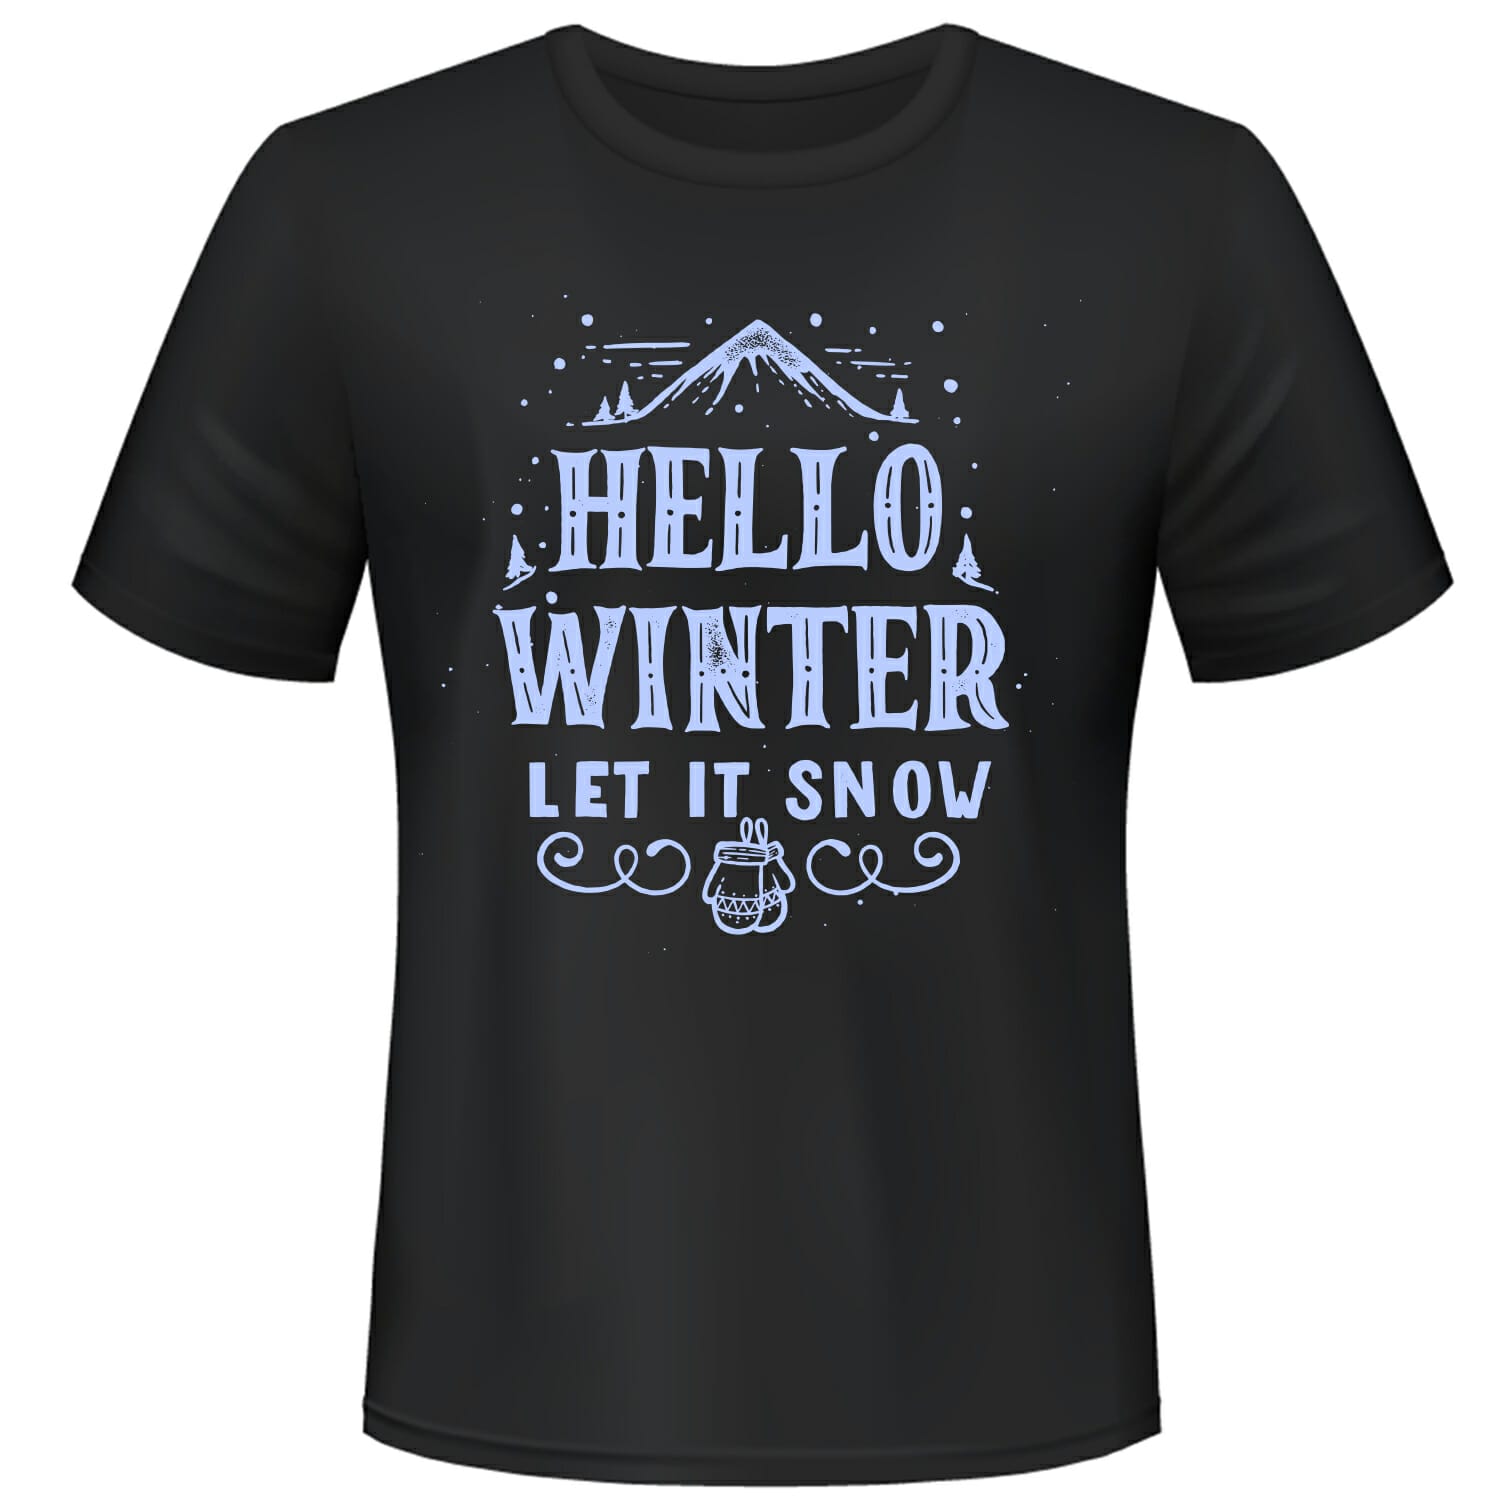 Hello winter let it snow Christmas t shirt design